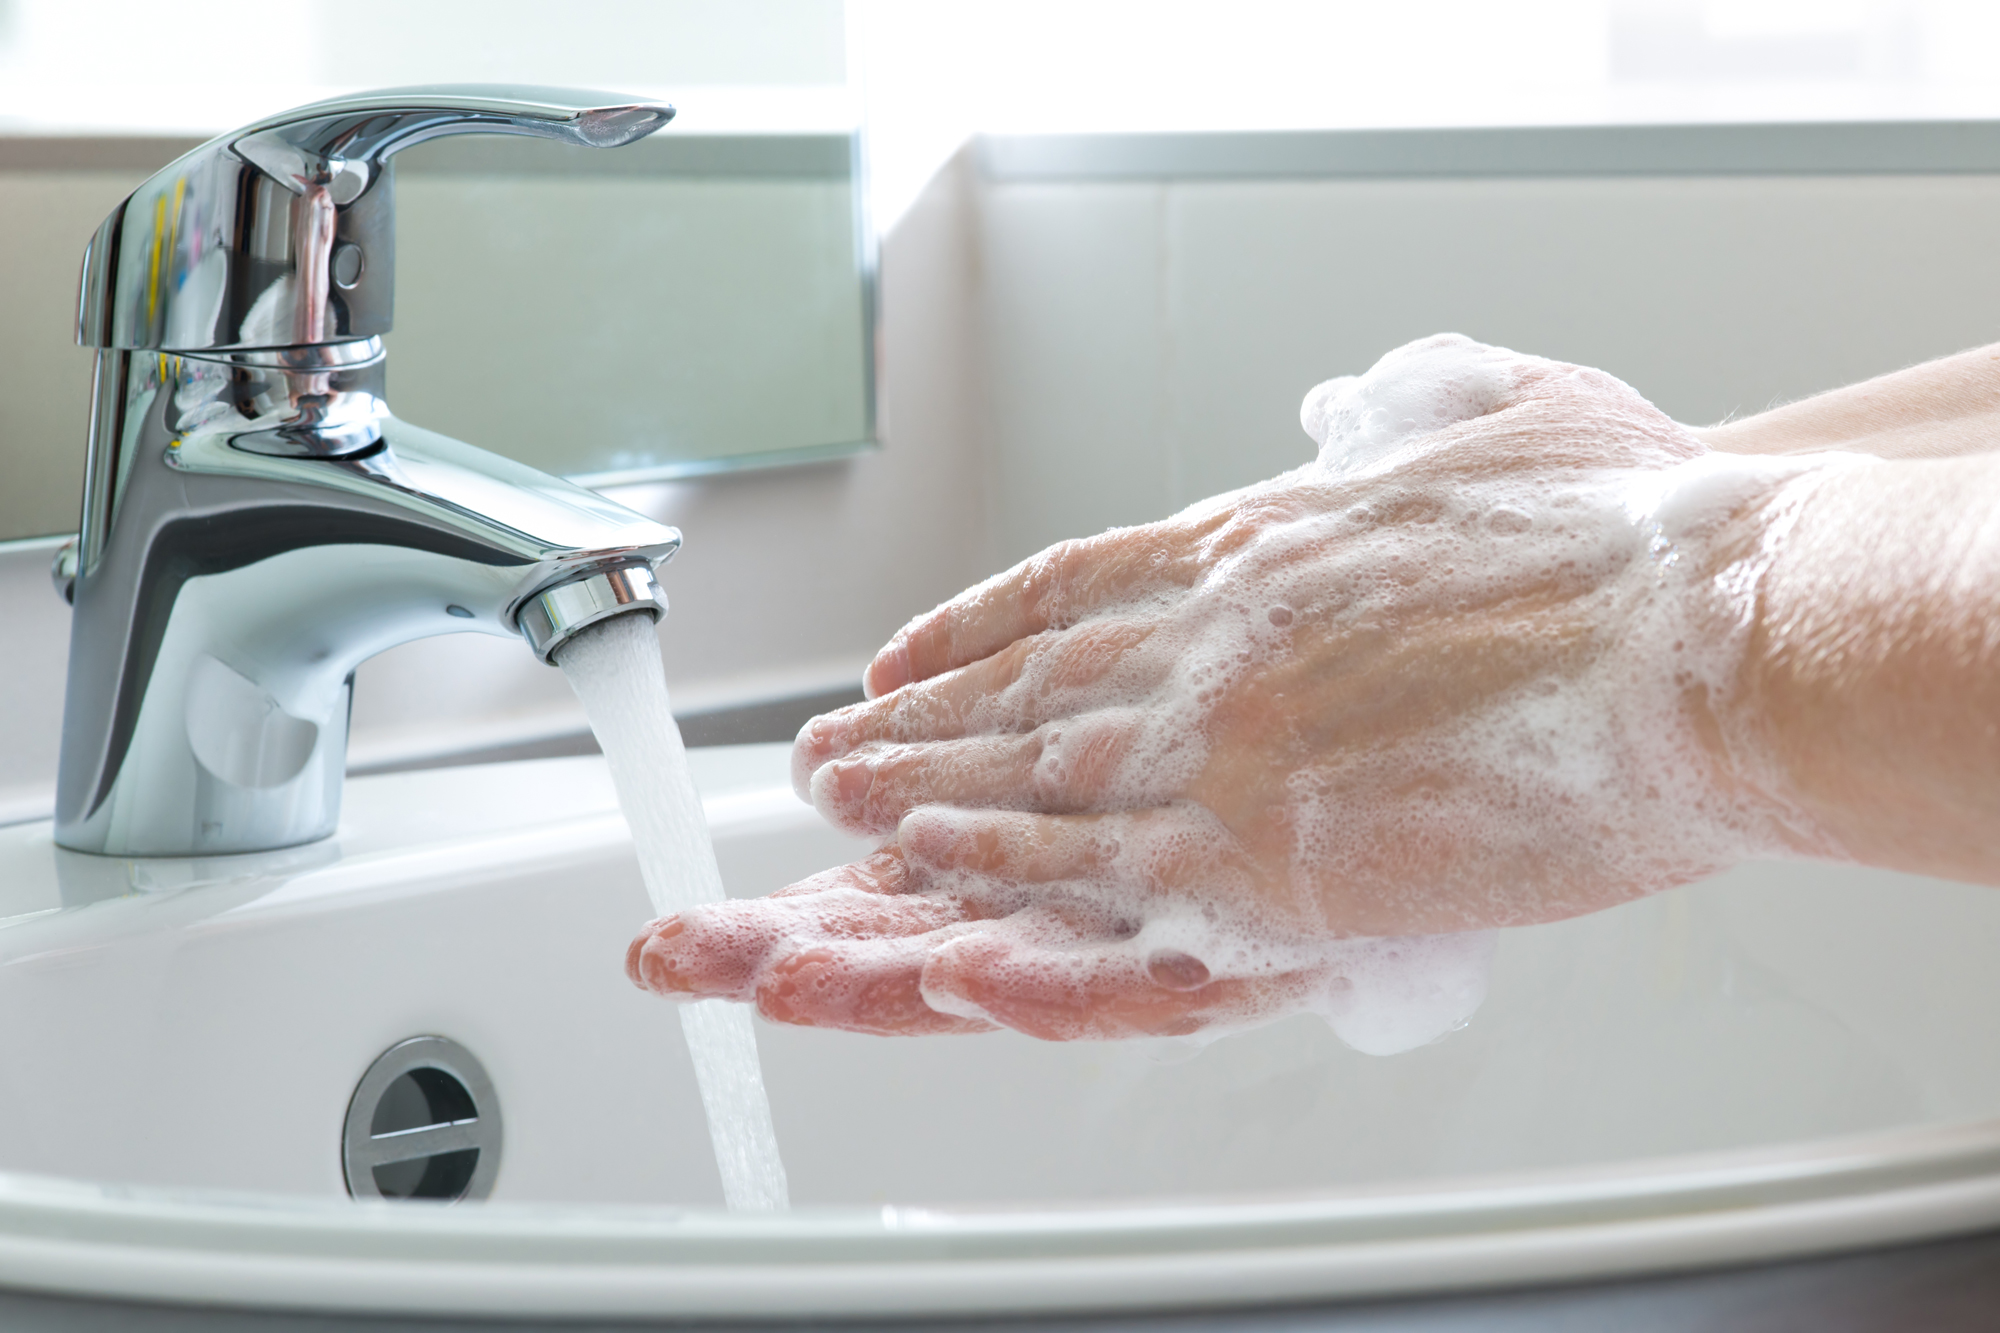 https://www.safefood.net/getmedia/6ae974b6-d205-4241-a94f-f8ecdc327214/Handwashing-1.jpg?width=2000&height=1333&ext=.jpg